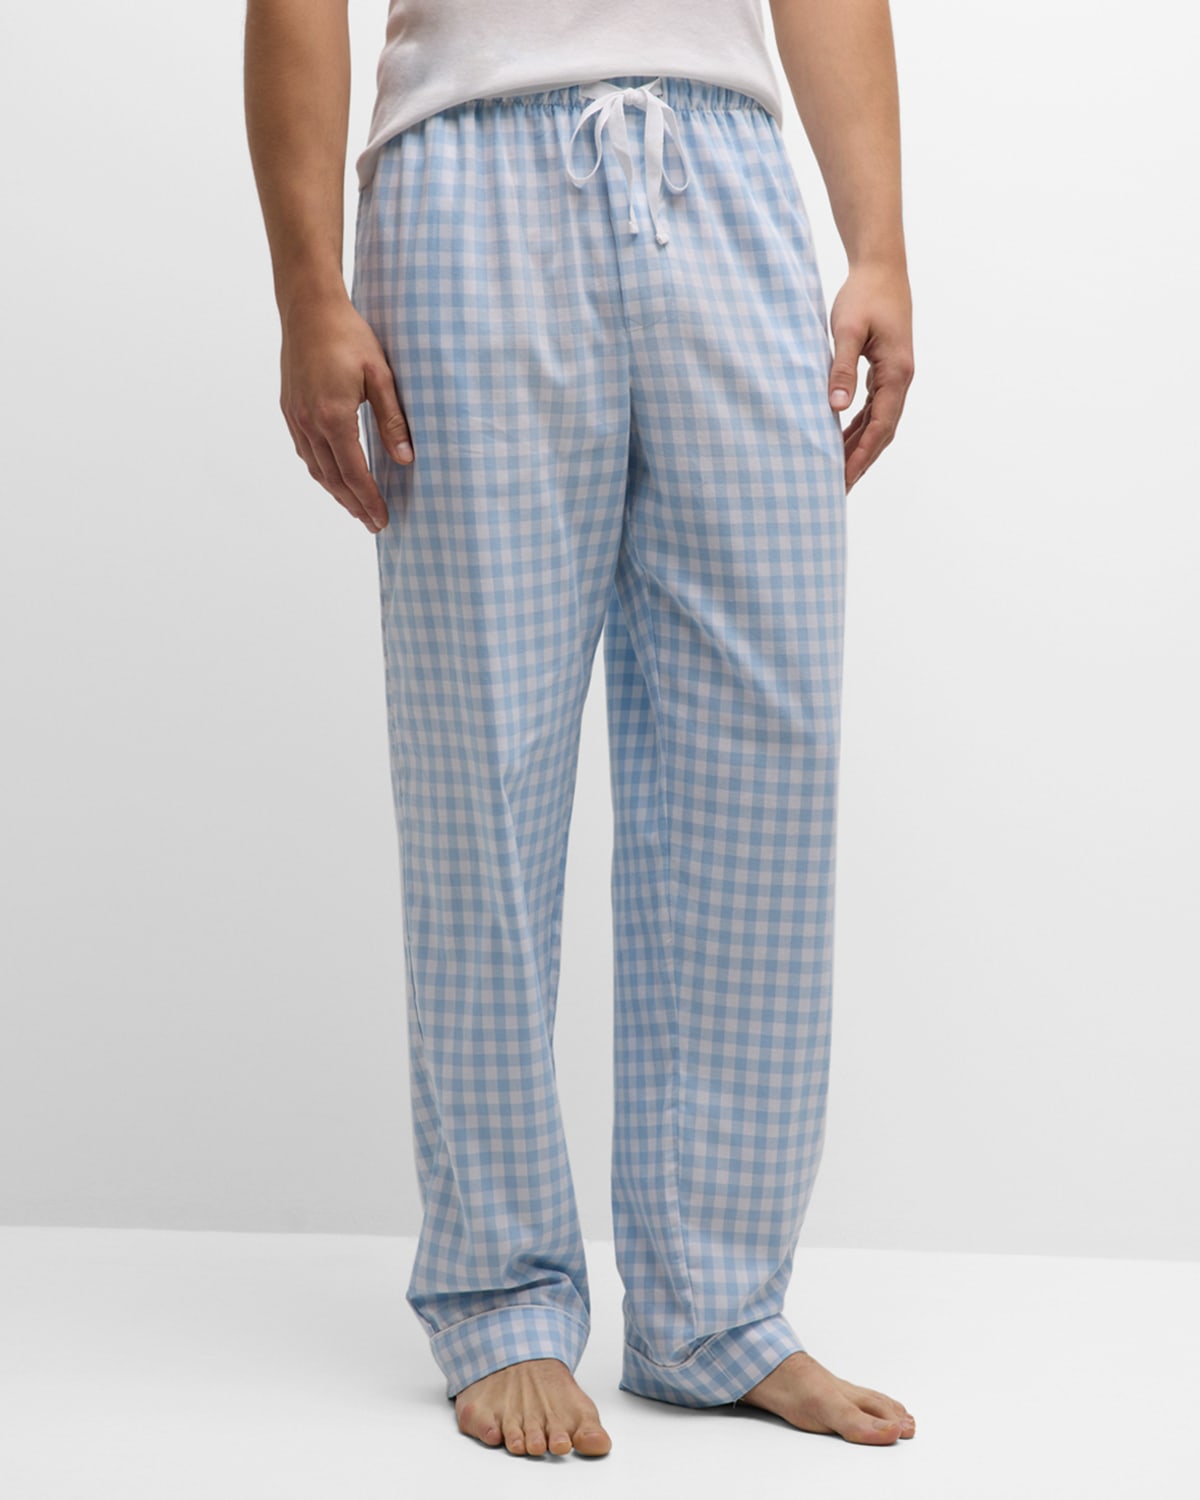 Men's Cotton Gingham Check Pajama Pants